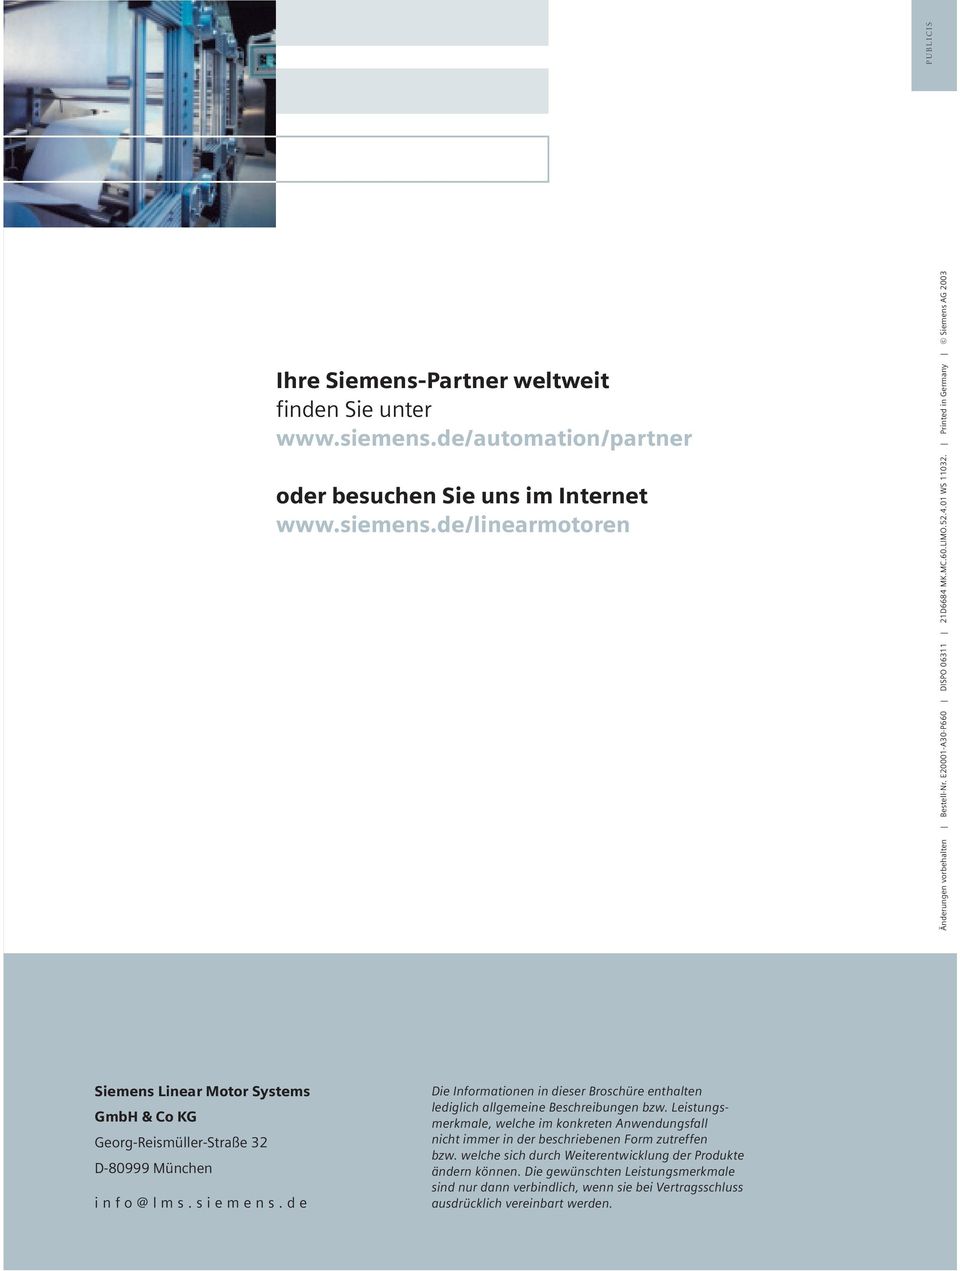 Printed in Germany Siemens AG 2003 Siemens Linear Motor Systems GmbH & Co KG Georg-Reismüller-Straße 32 D-80999 München info@lms.siemens.